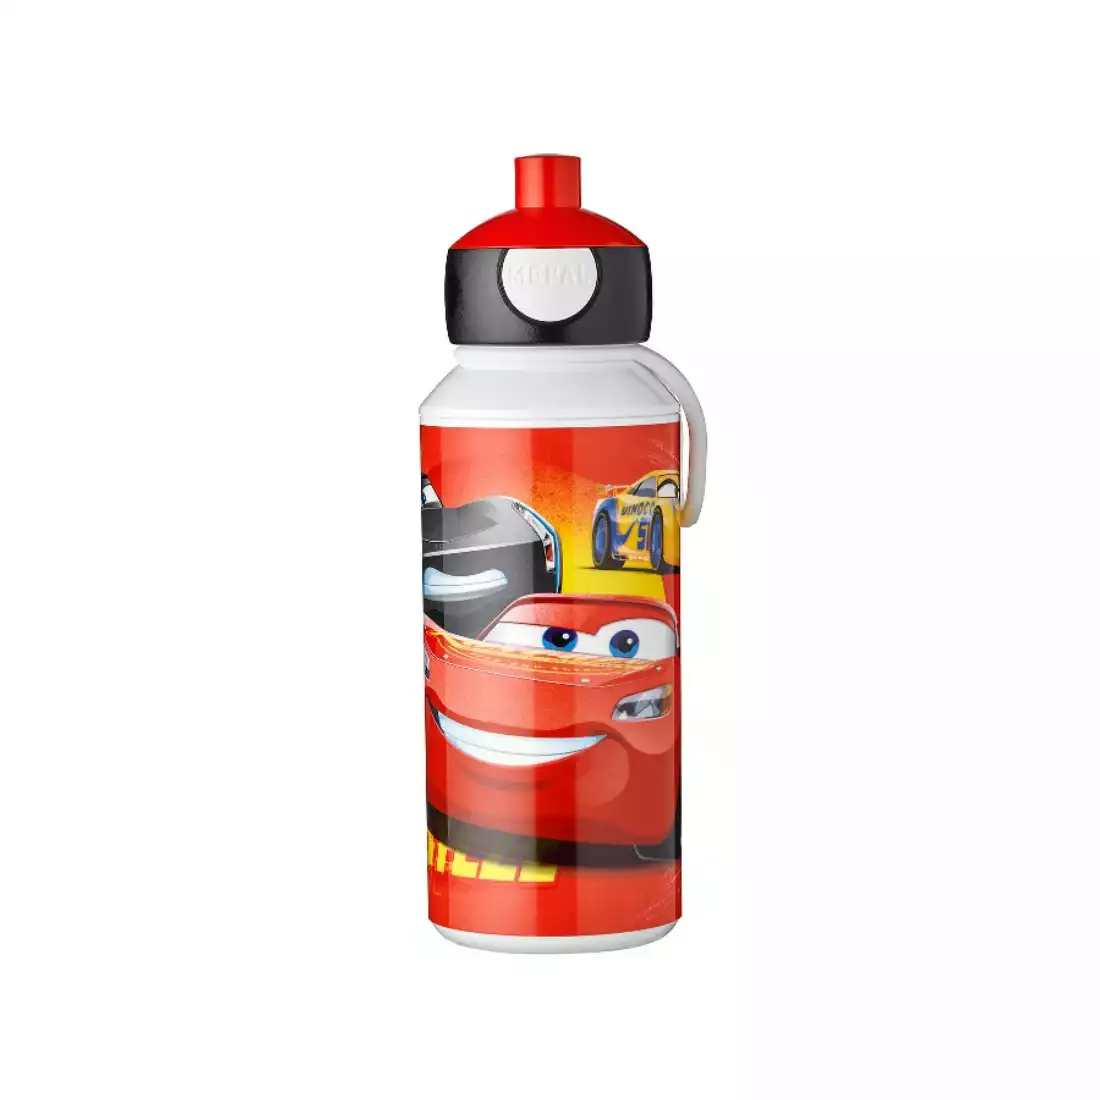 MEPAL CAMPUS POP UP water bottle for children 400ml Cars 